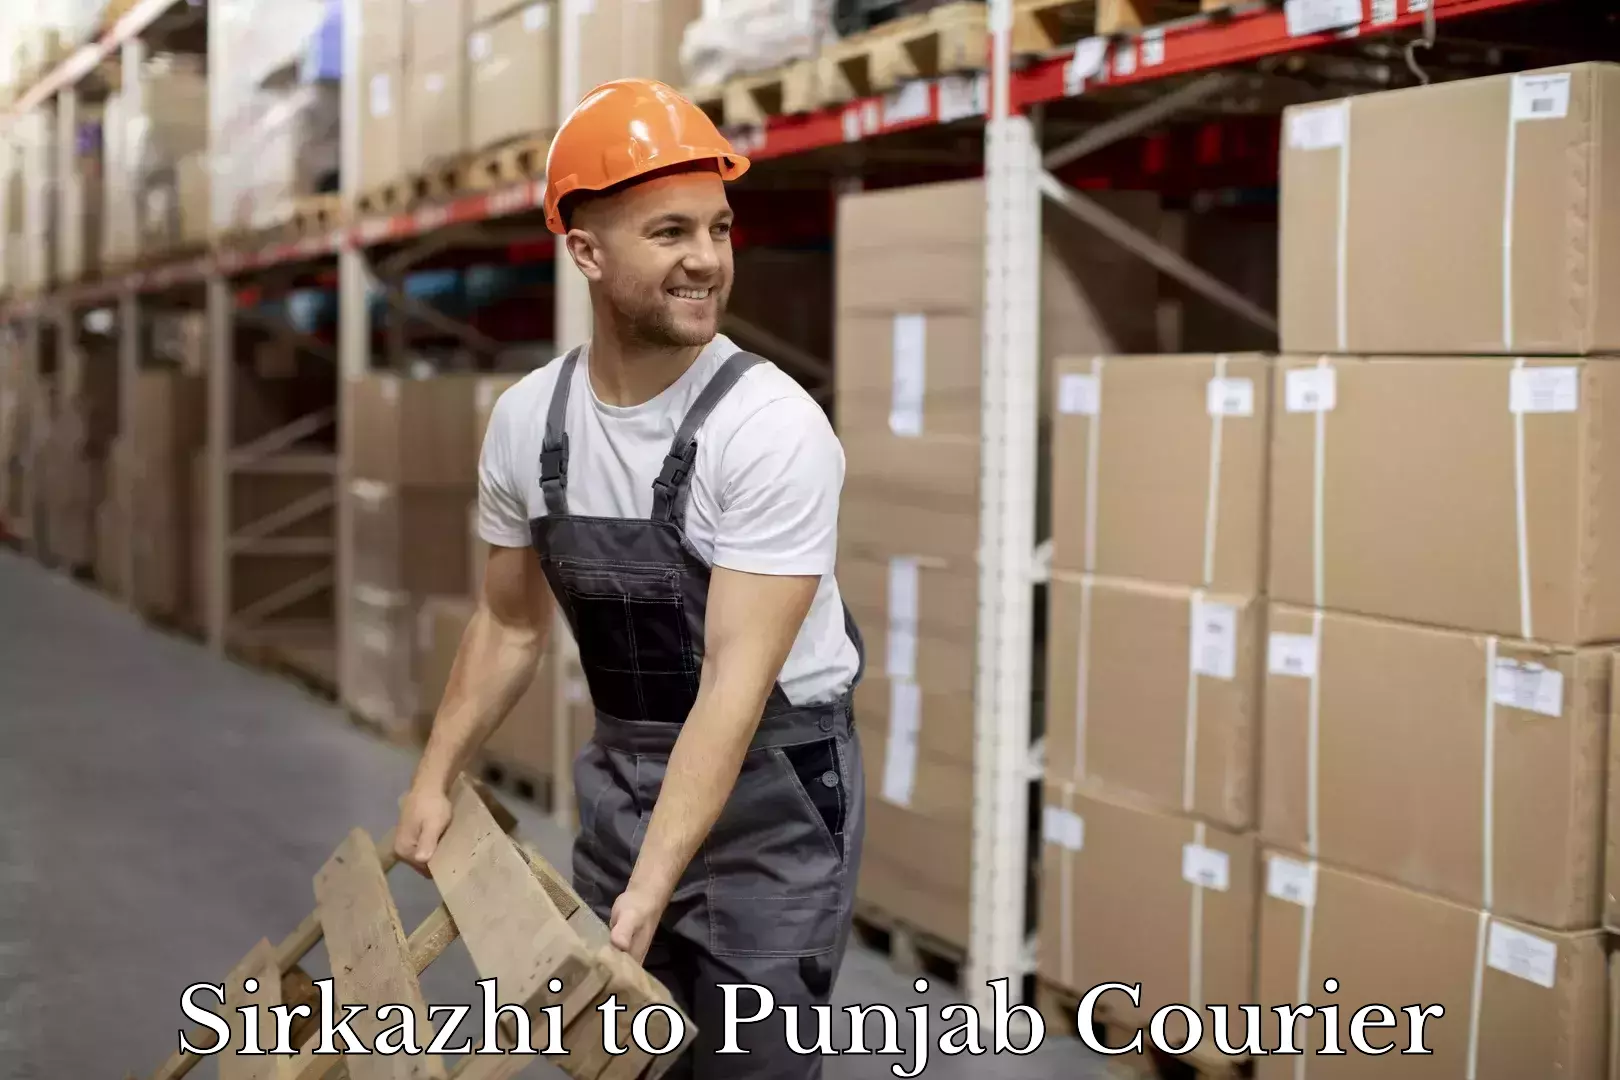 Nationwide delivery network Sirkazhi to Punjab